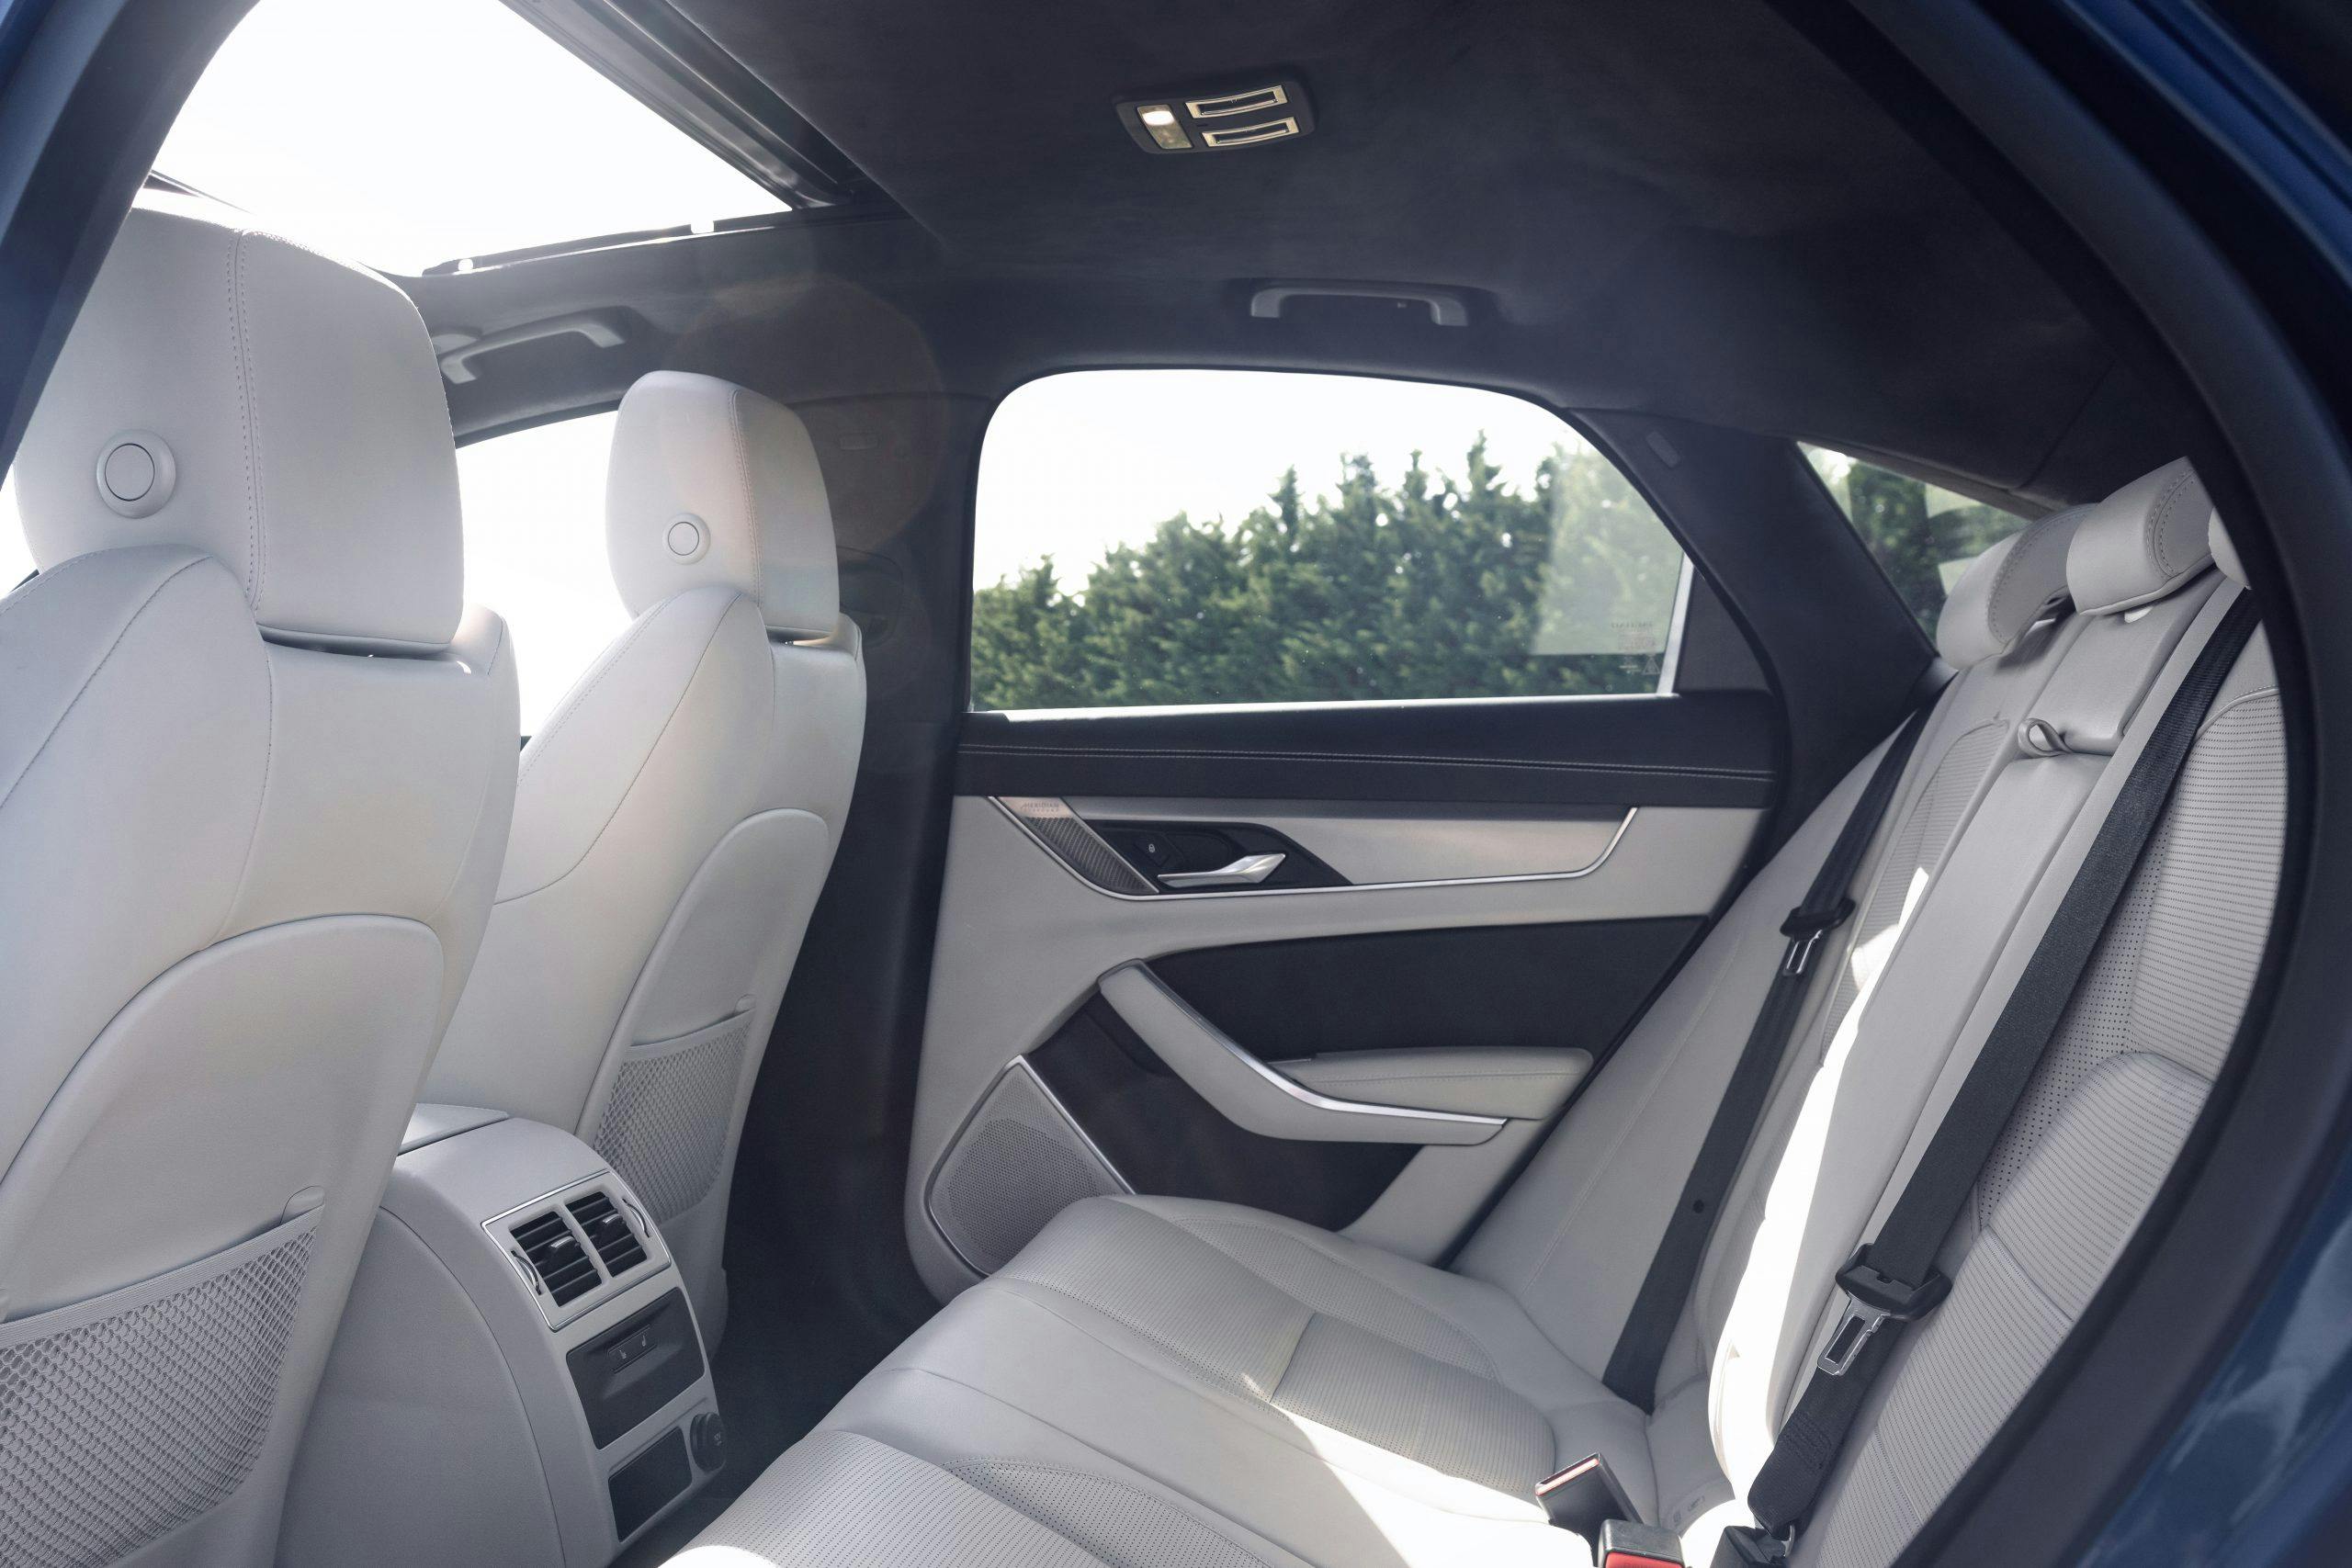 2021 Jaguar XF interior rear seats